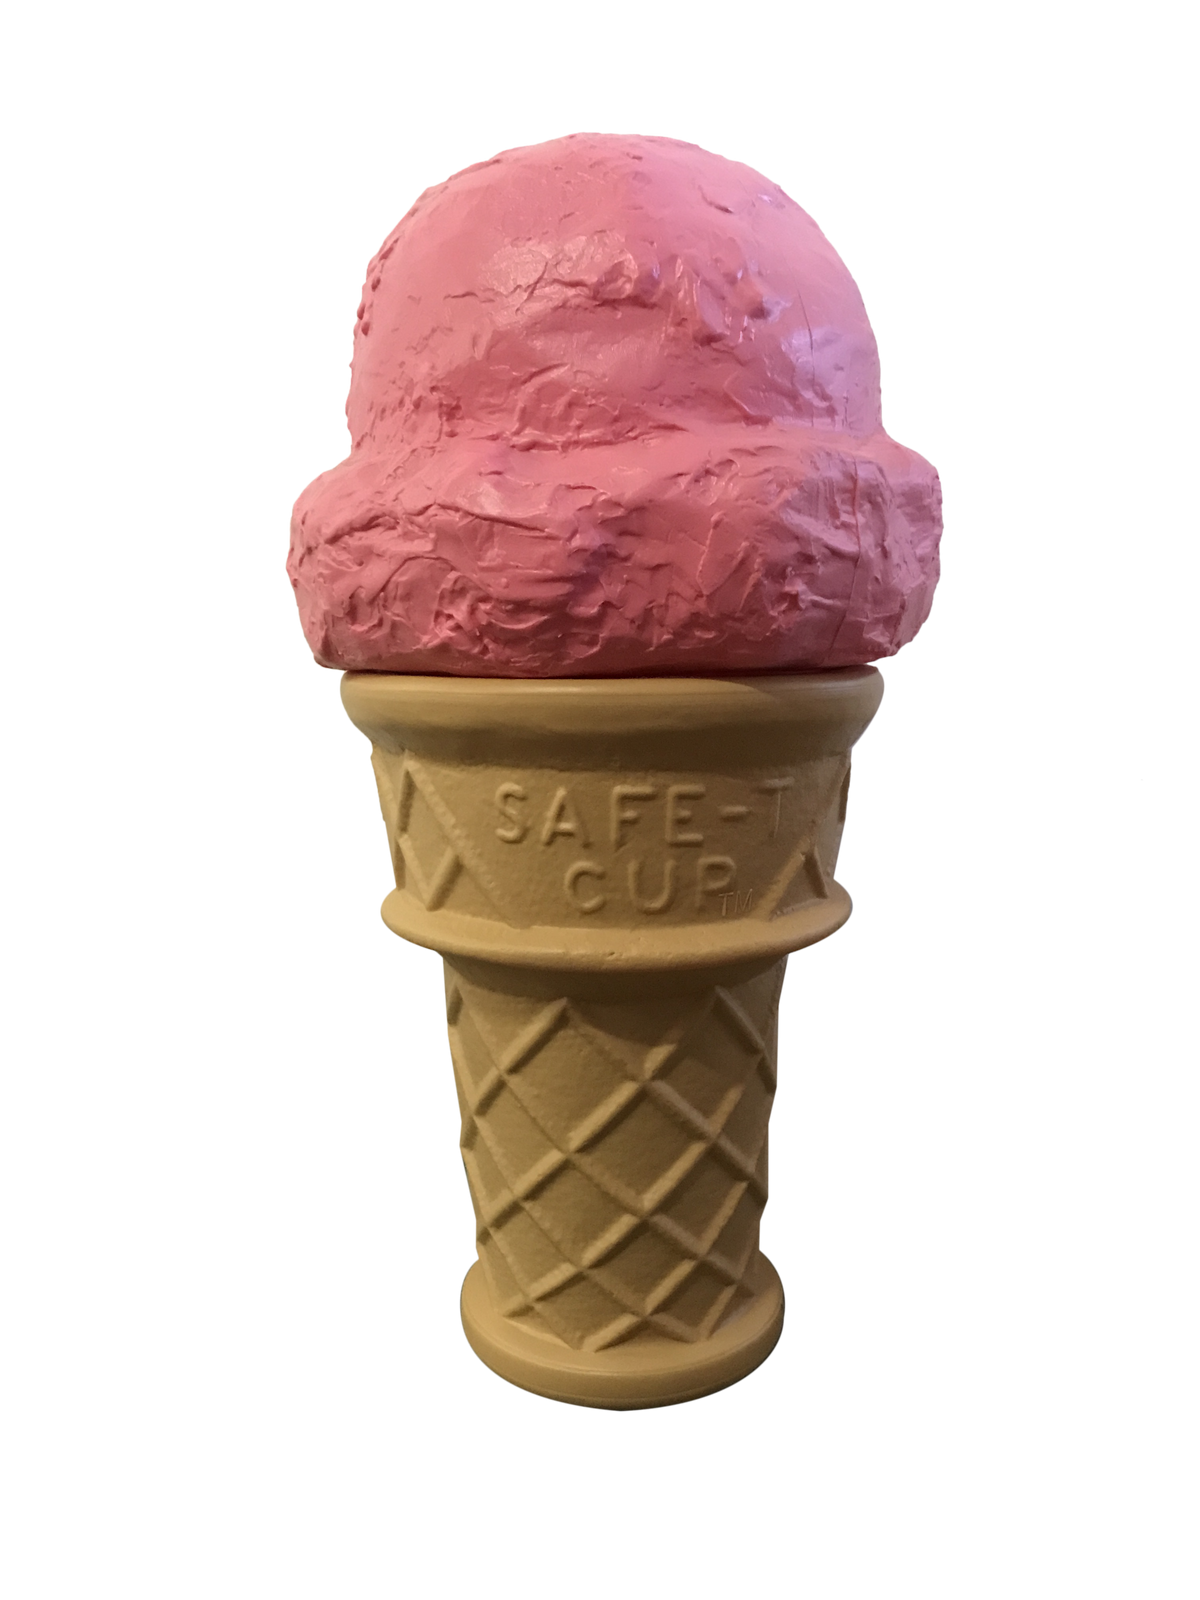 Pink Ice Cream Cone